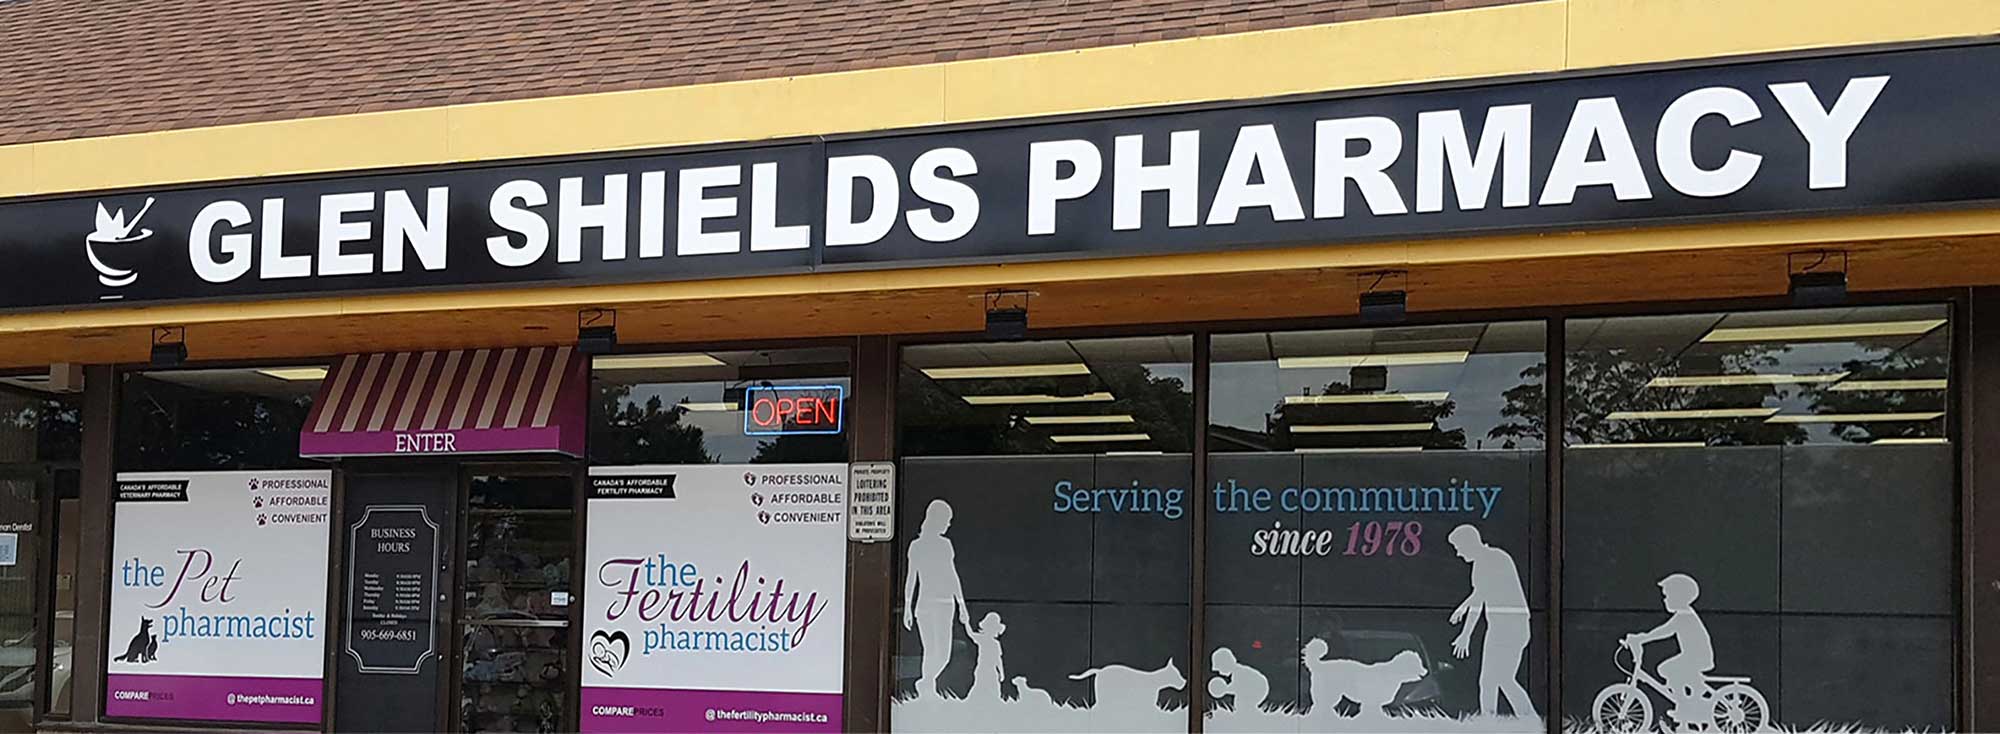 Glen Shields Pharmacy image